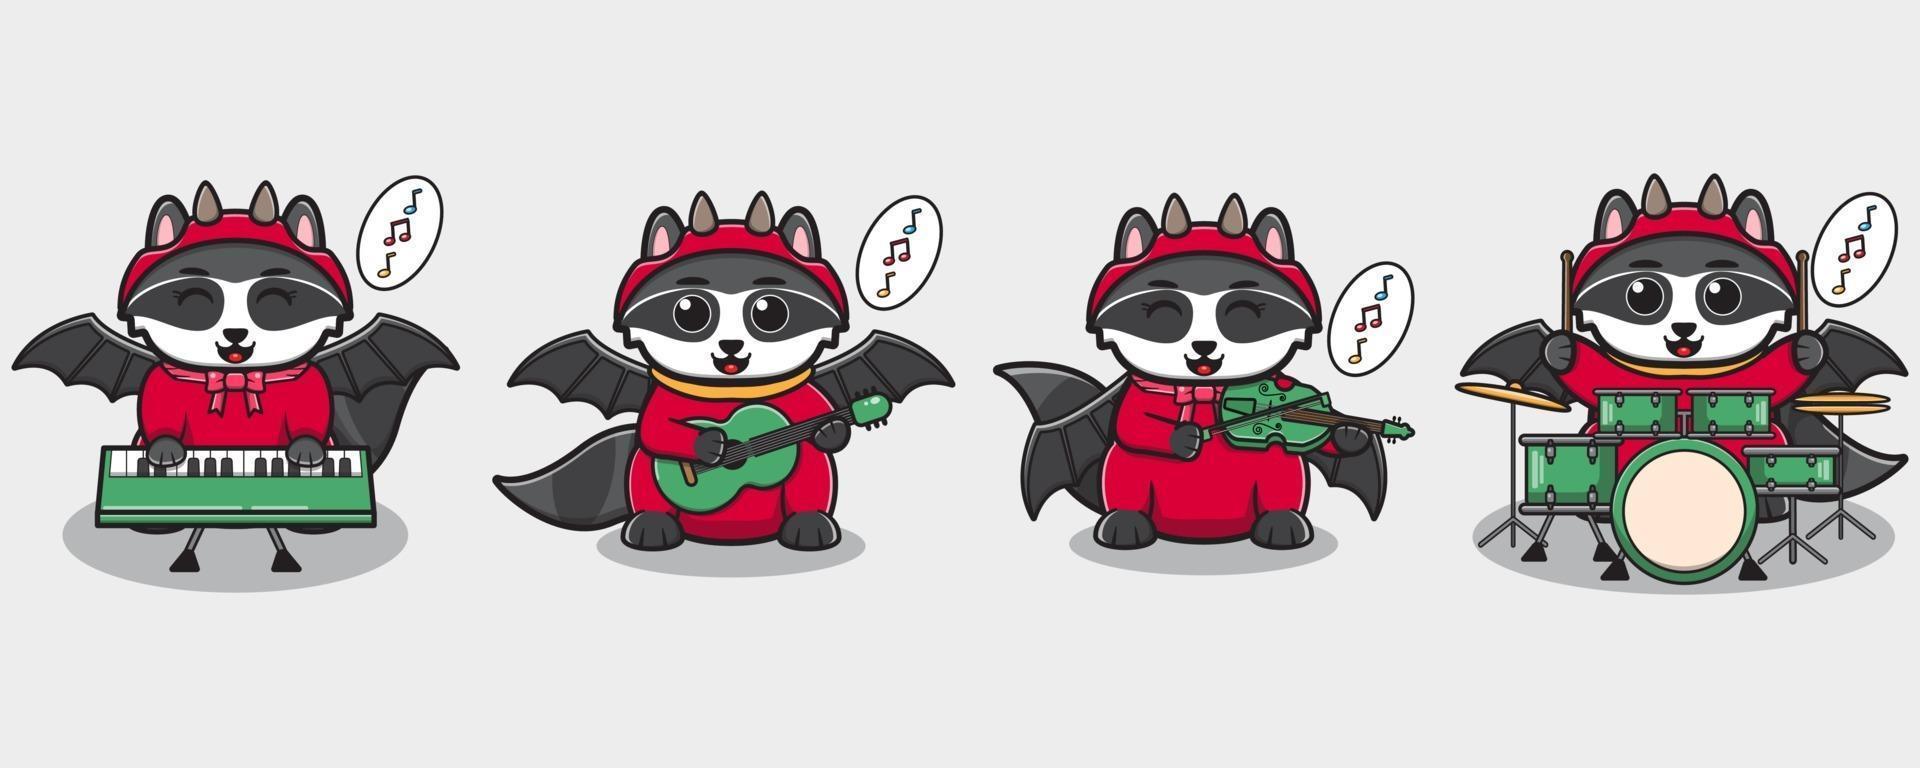 mapache con disfraz de diablo tocar un instrumento musical. vector